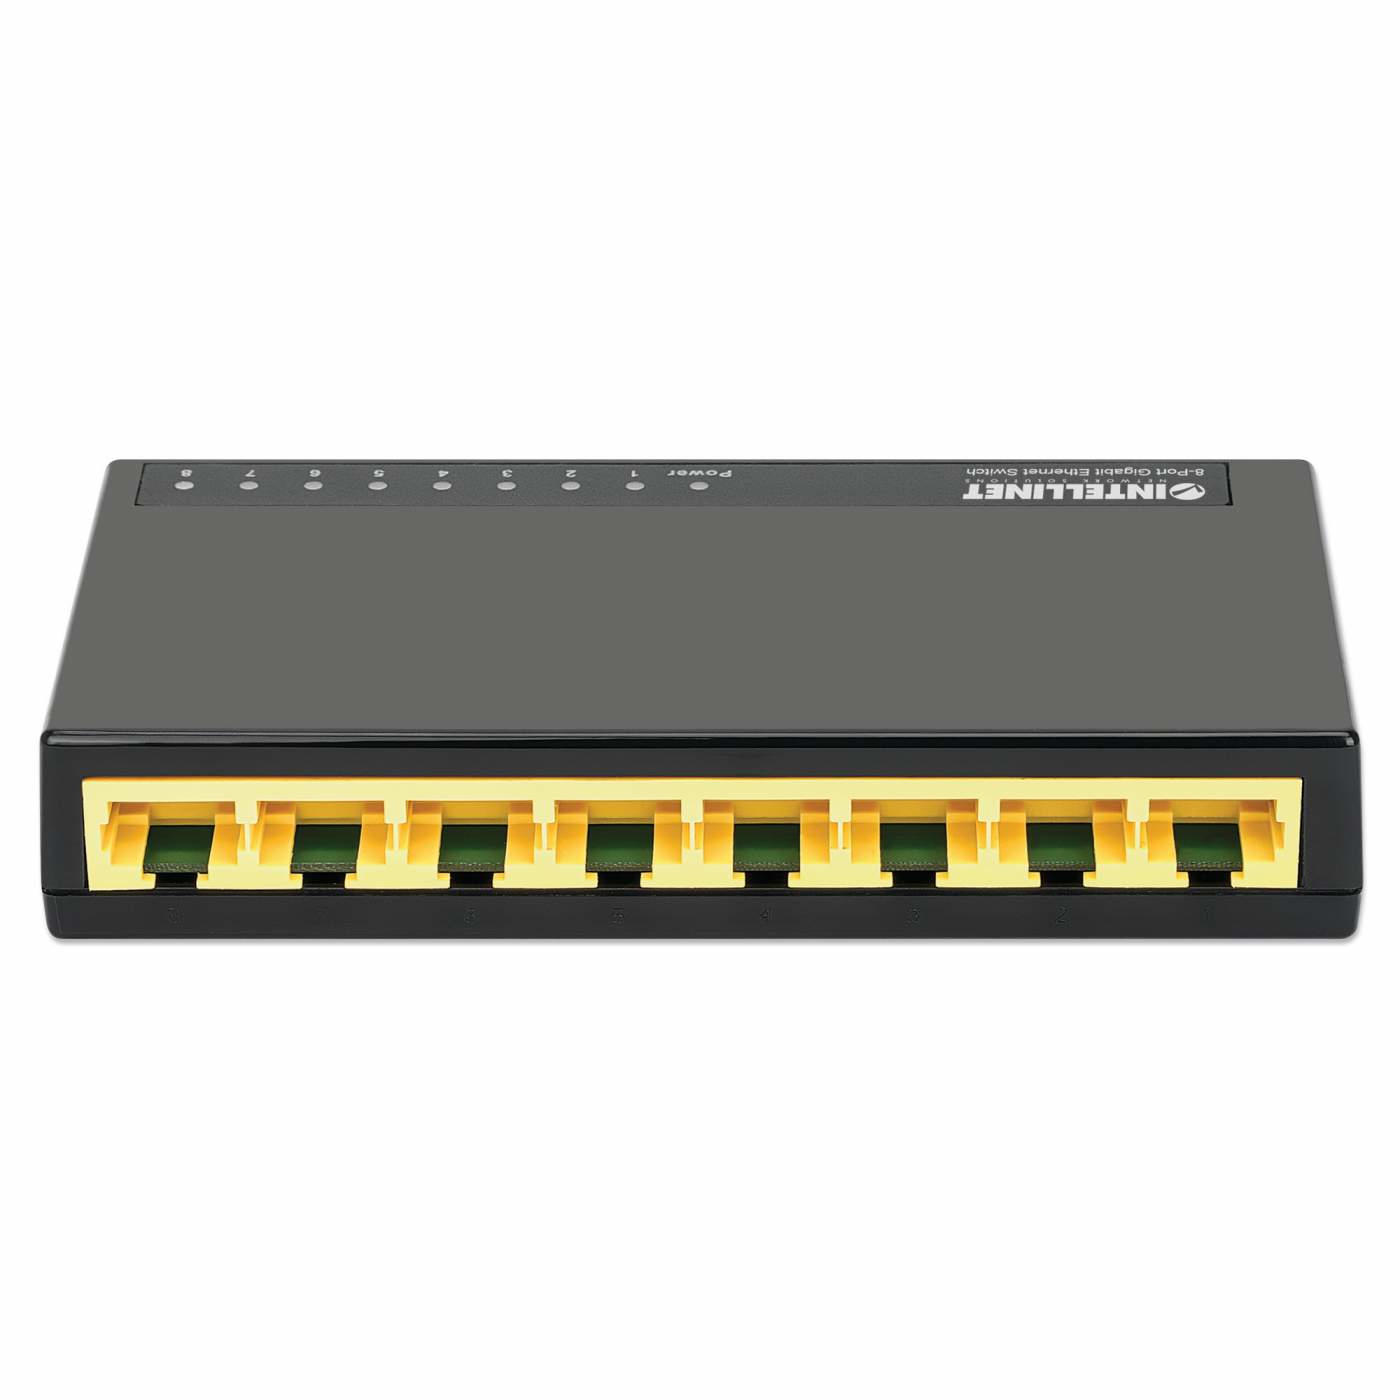 INTELLINET Desktop 8-Port Gigabit Ethernet Switch schwarz